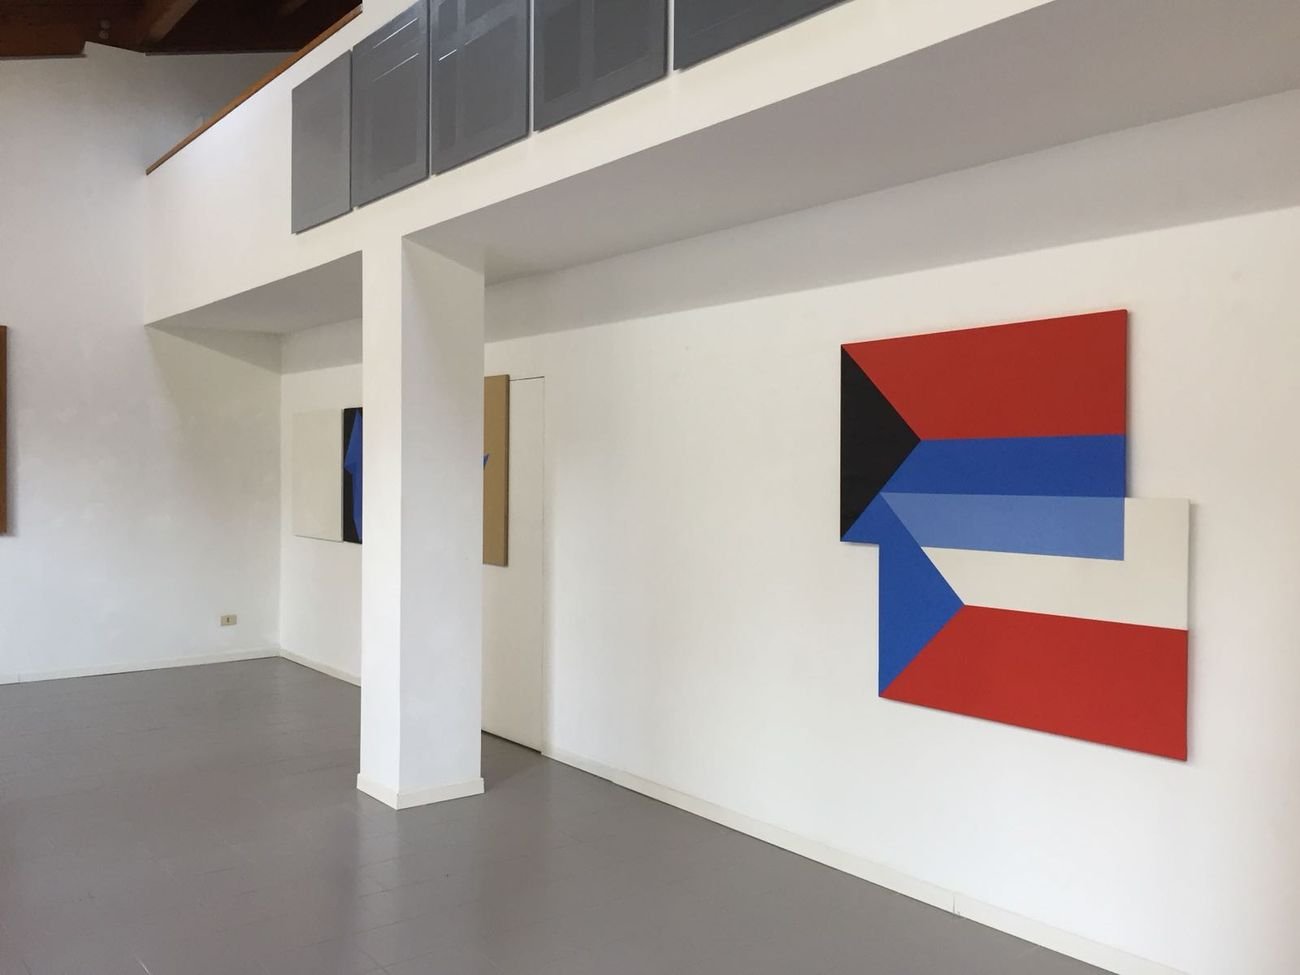 Antonio Passa. Tutto passa in tre mesi. Exhibition view at Archivio Menna, Roma 2018